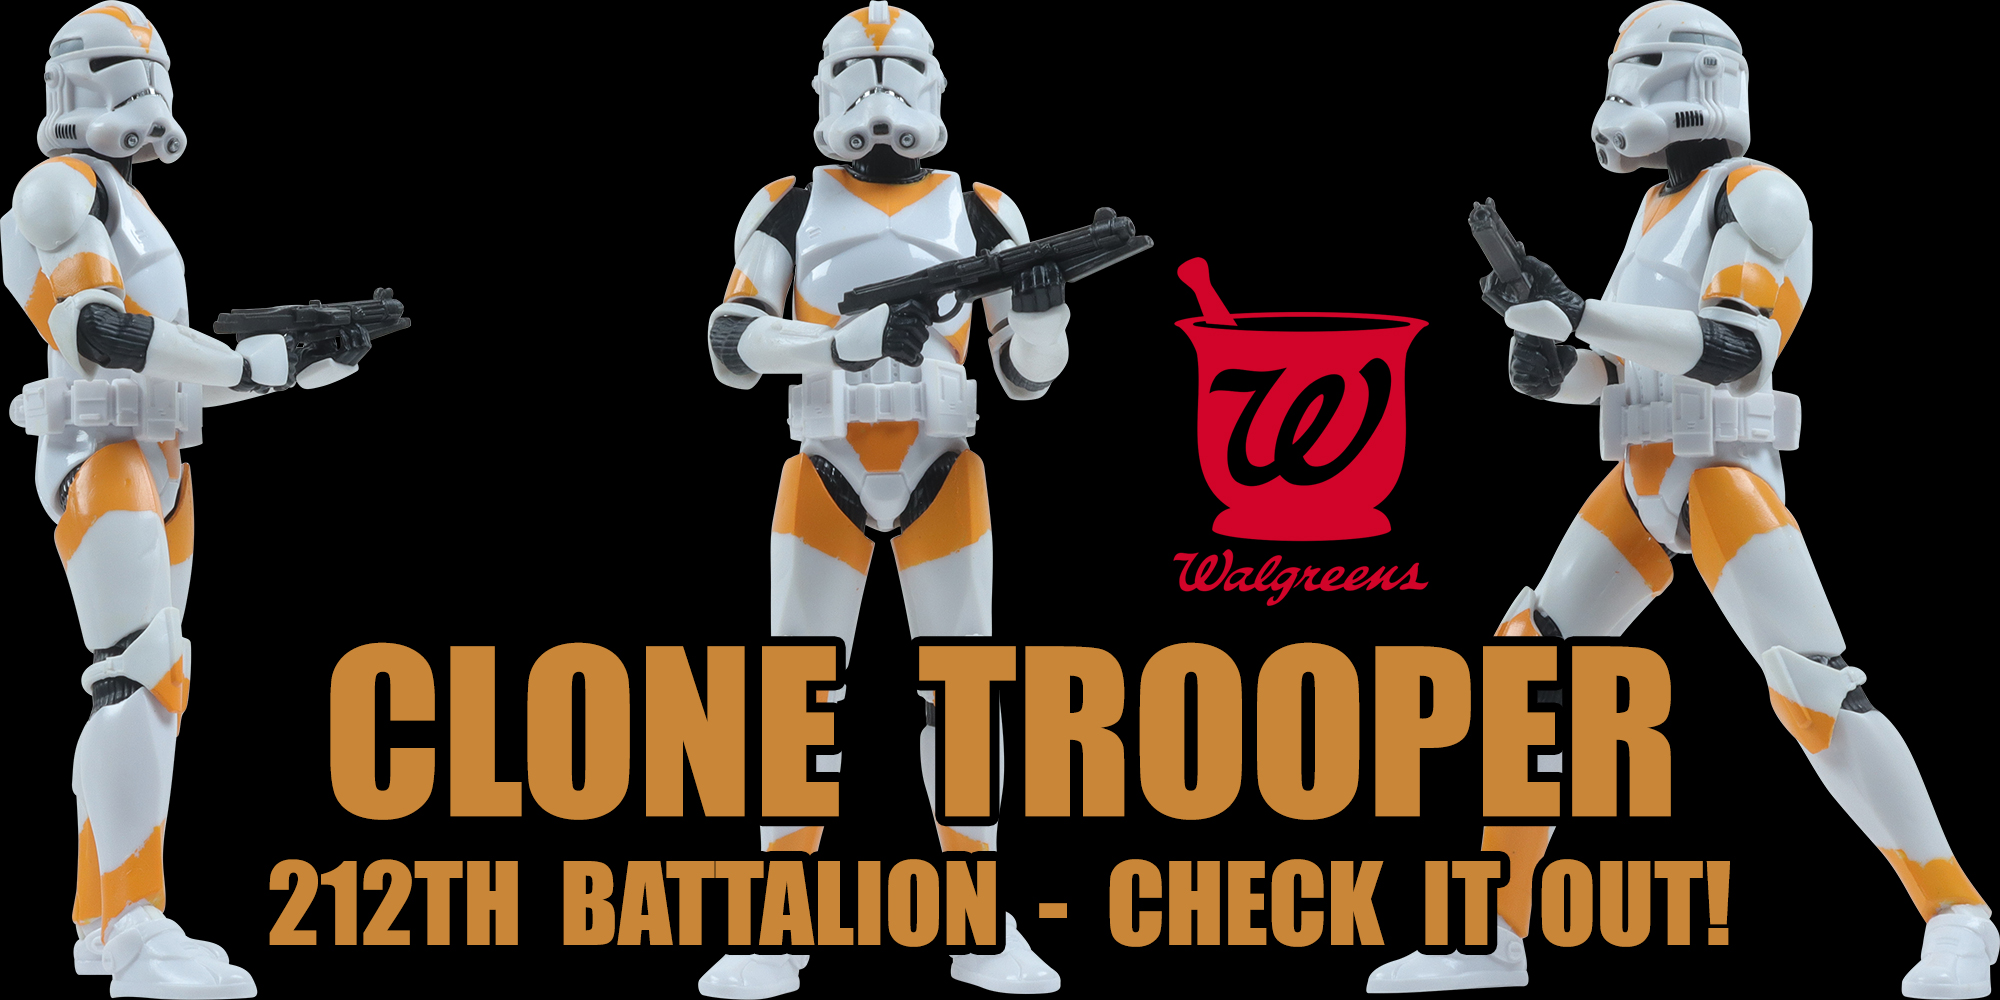 Clone Trooper 212th Battalion Added